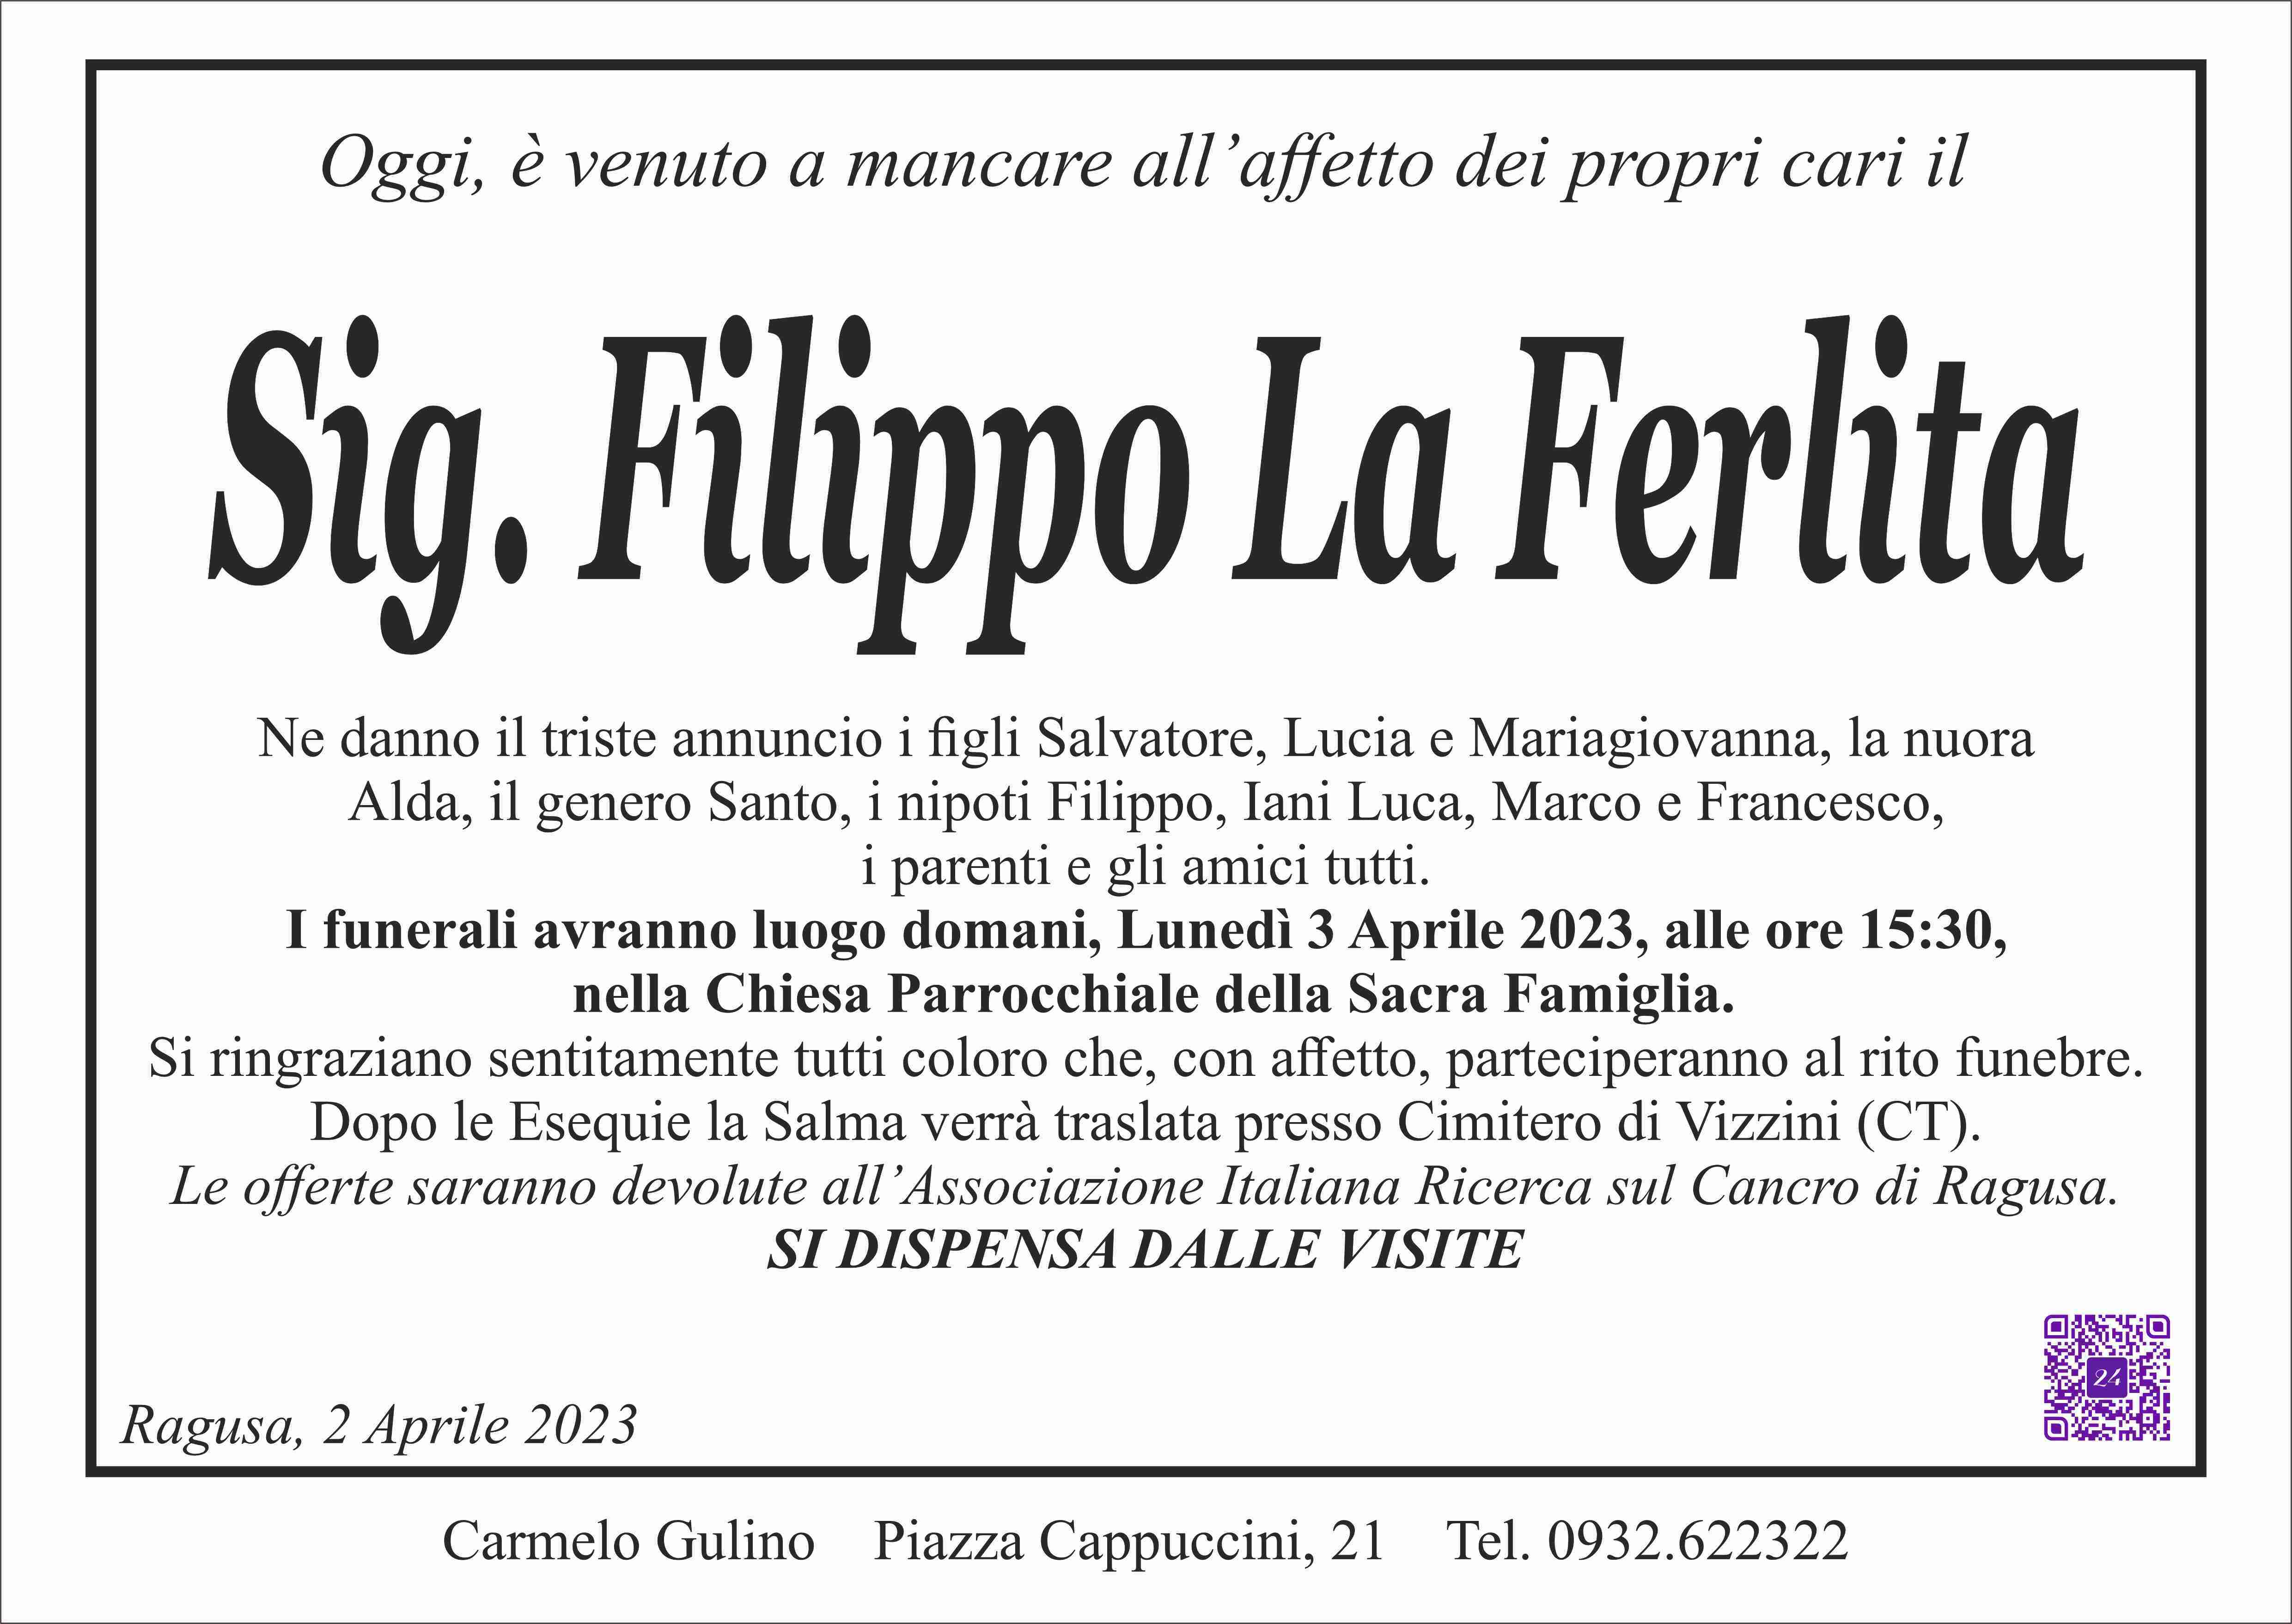 Filippo La Ferlita